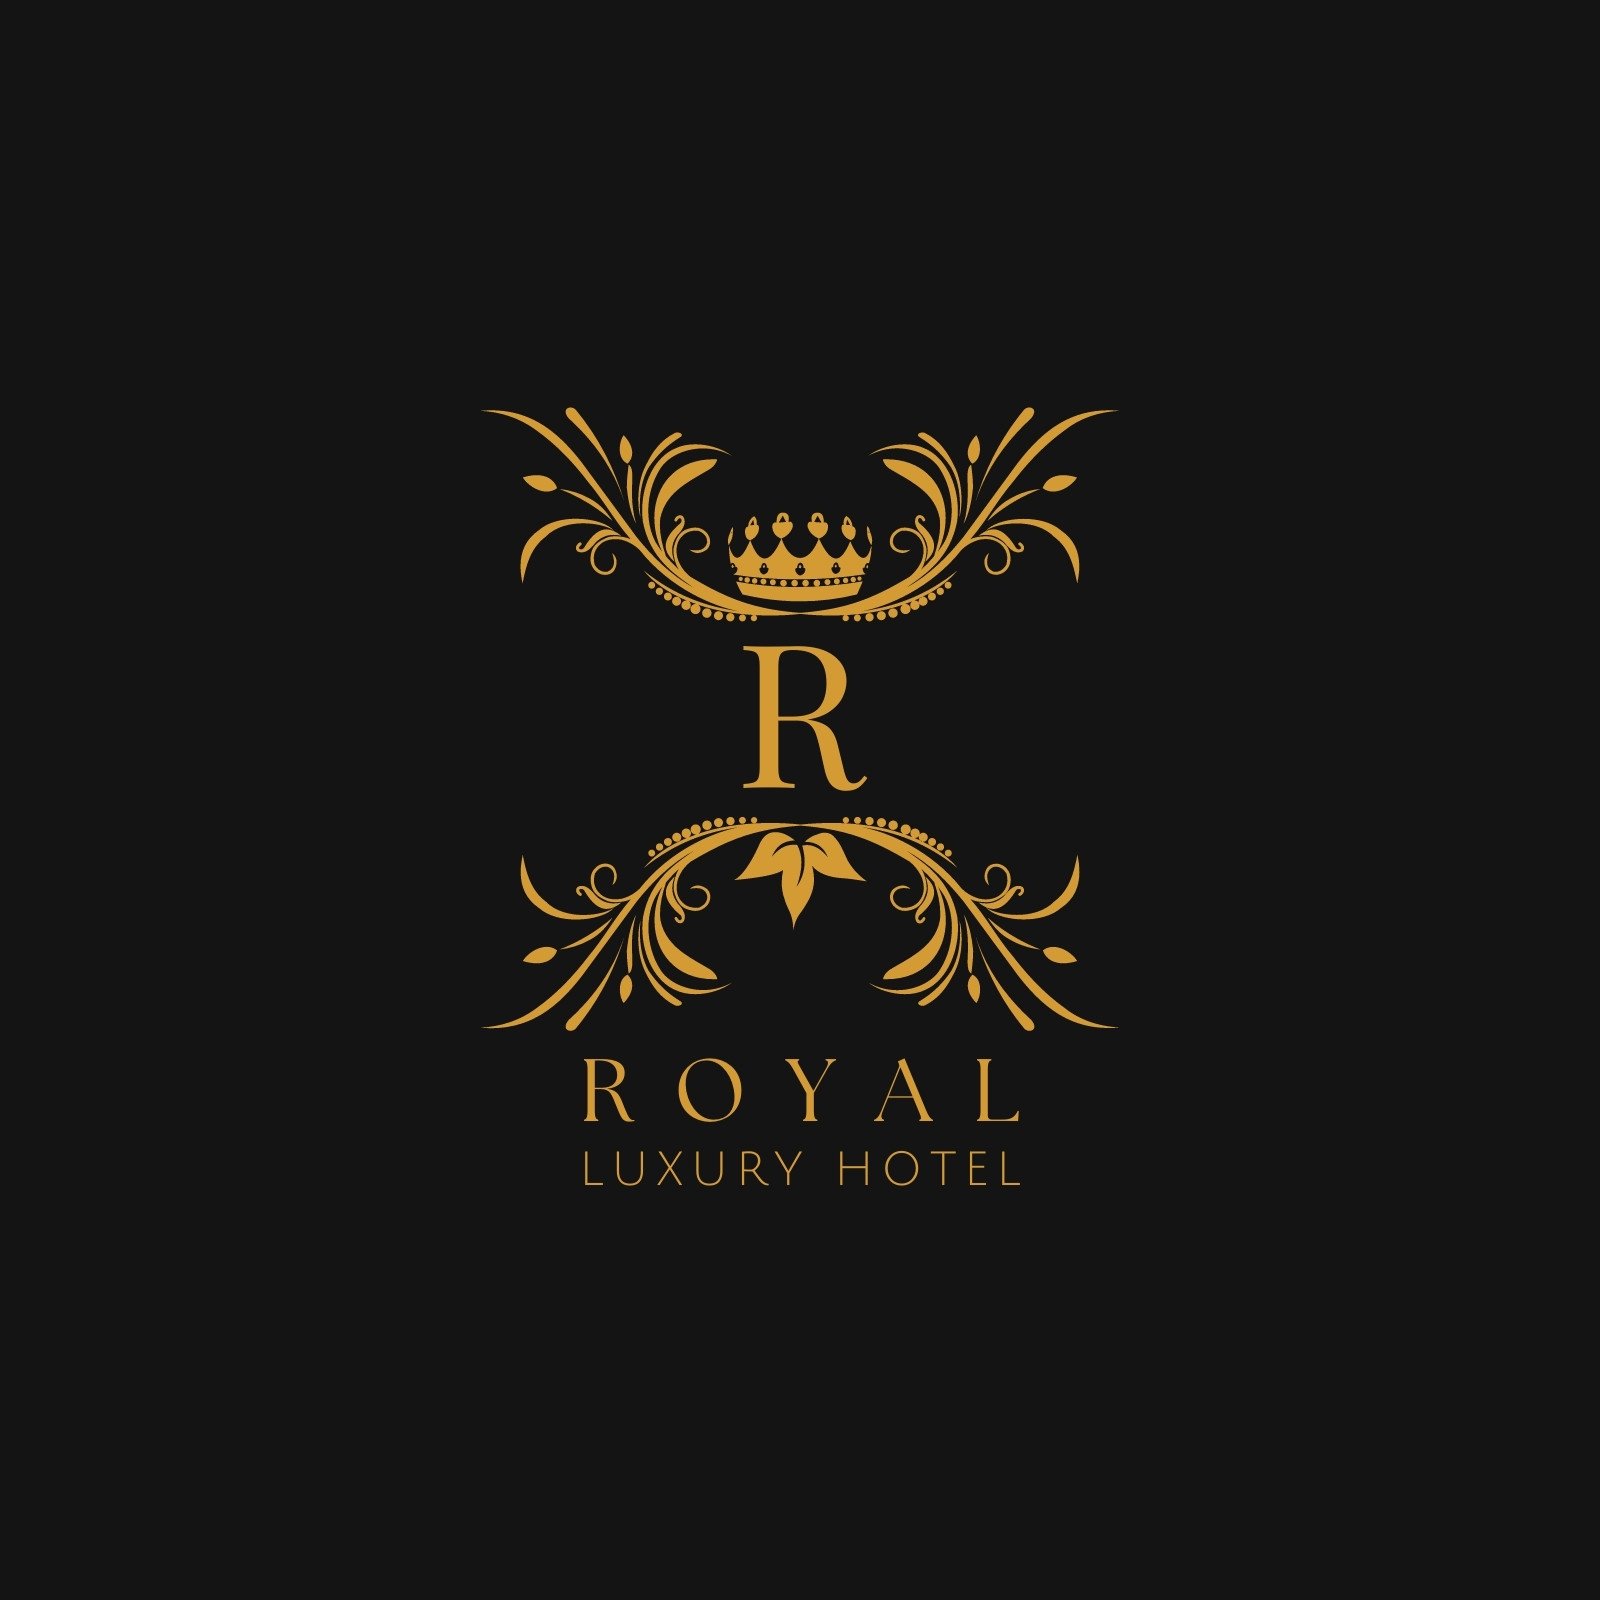 Luxury clover hotel logo design brand identity Vector Image